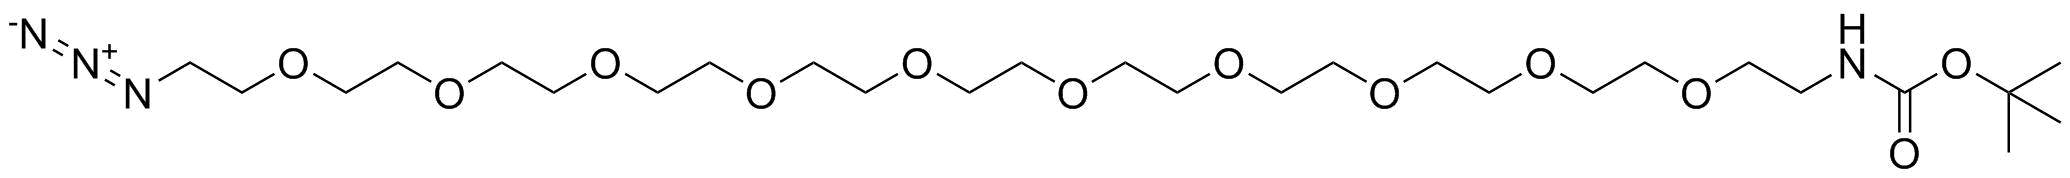 t-Boc-N-amido-PEG10-azide